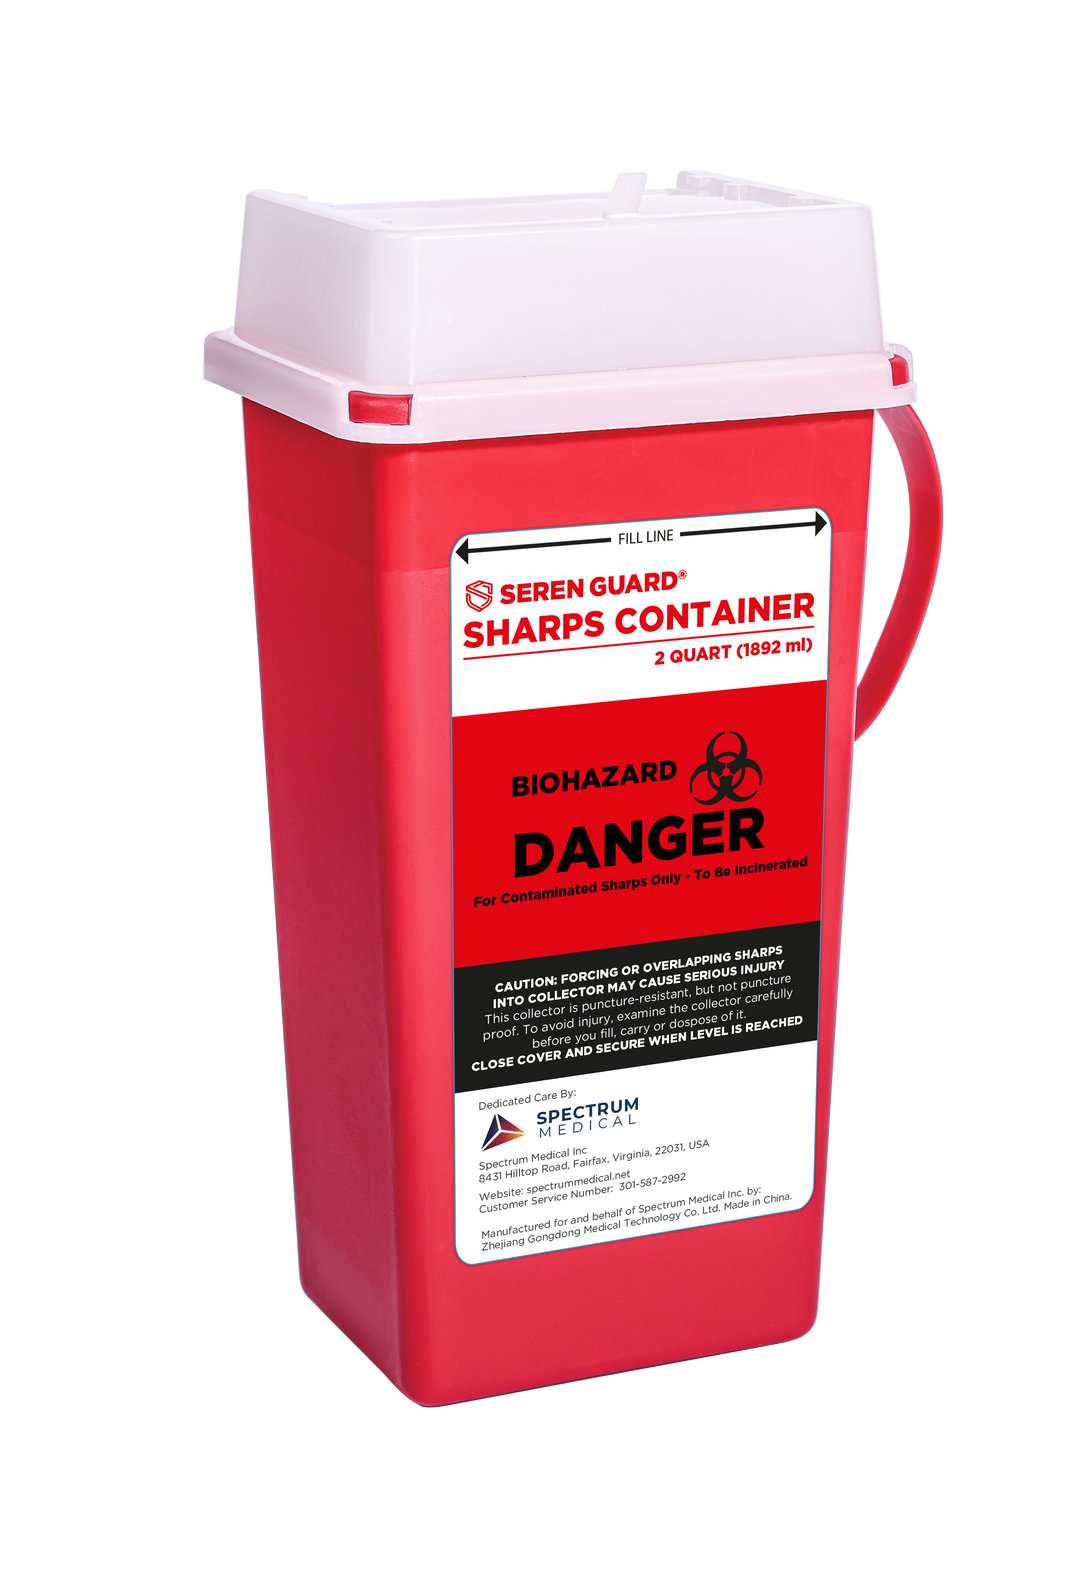 SEREN GUARD® Sharps Container – 2 Quart